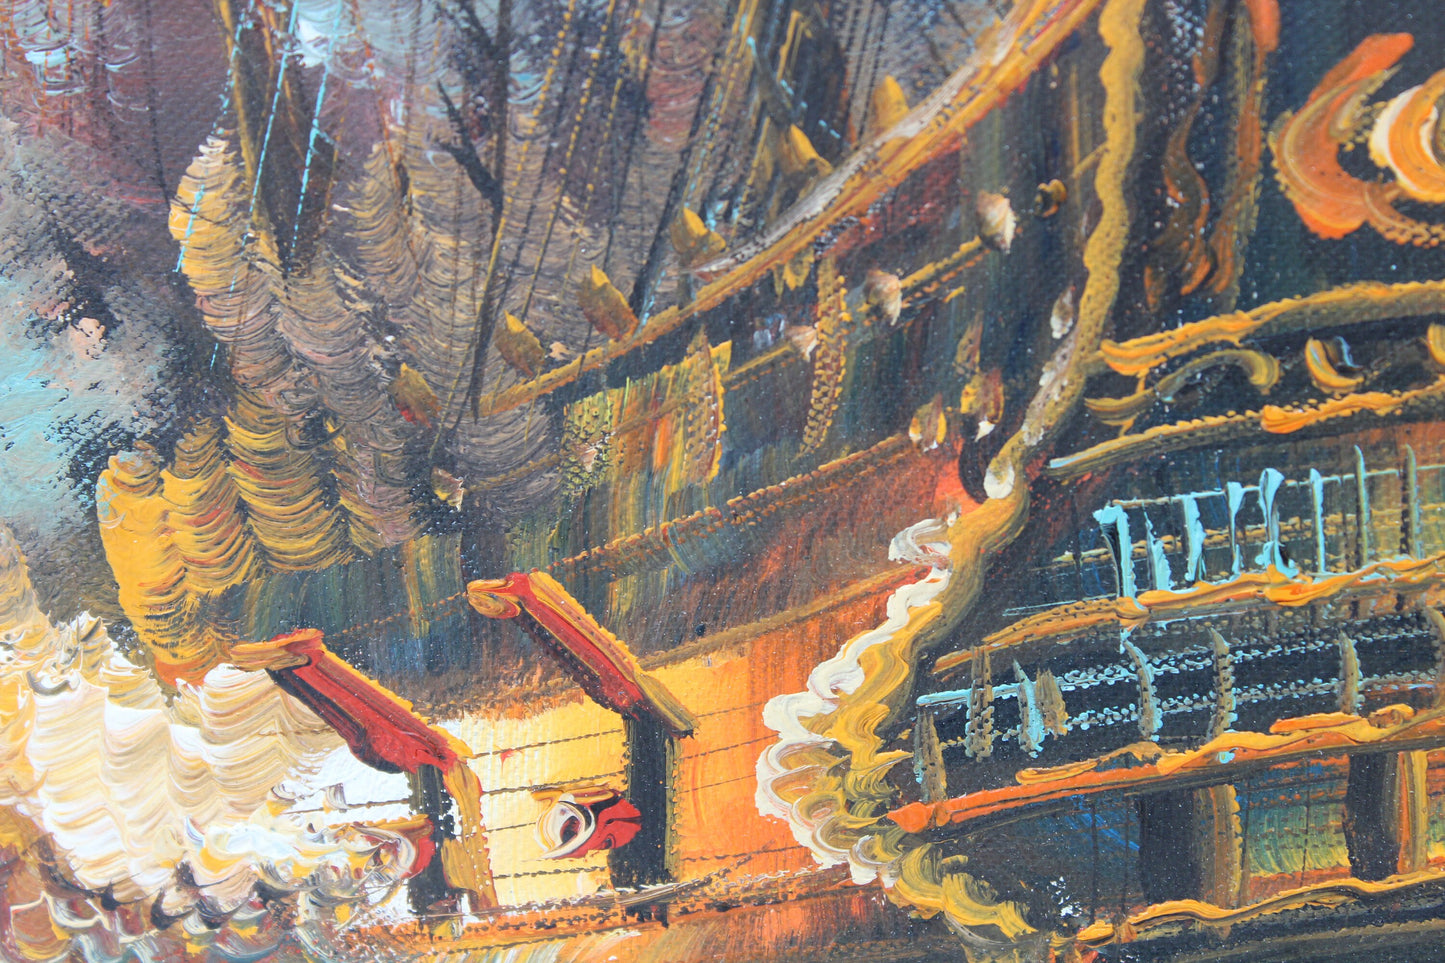 arge Oil painting on canvas, ShipJ.Harvey Ls BATTLE AT SEA, Signed, Framed